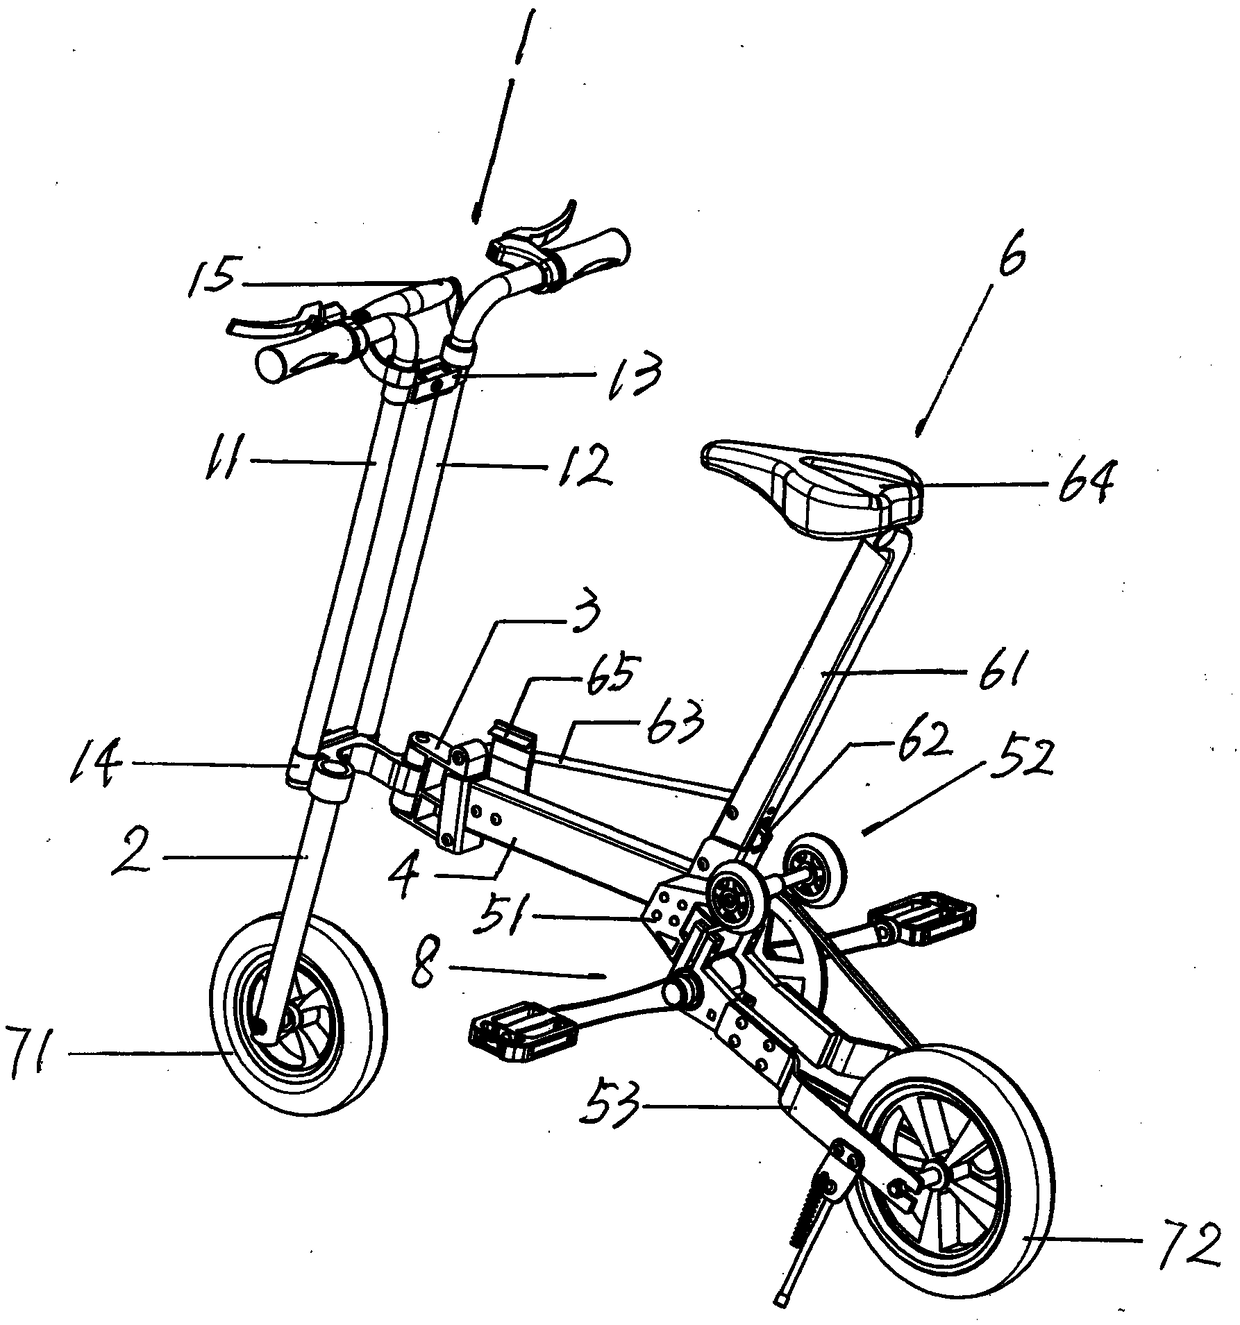 Telescopic handlebar bottom bracket shaft towable portable bicycle